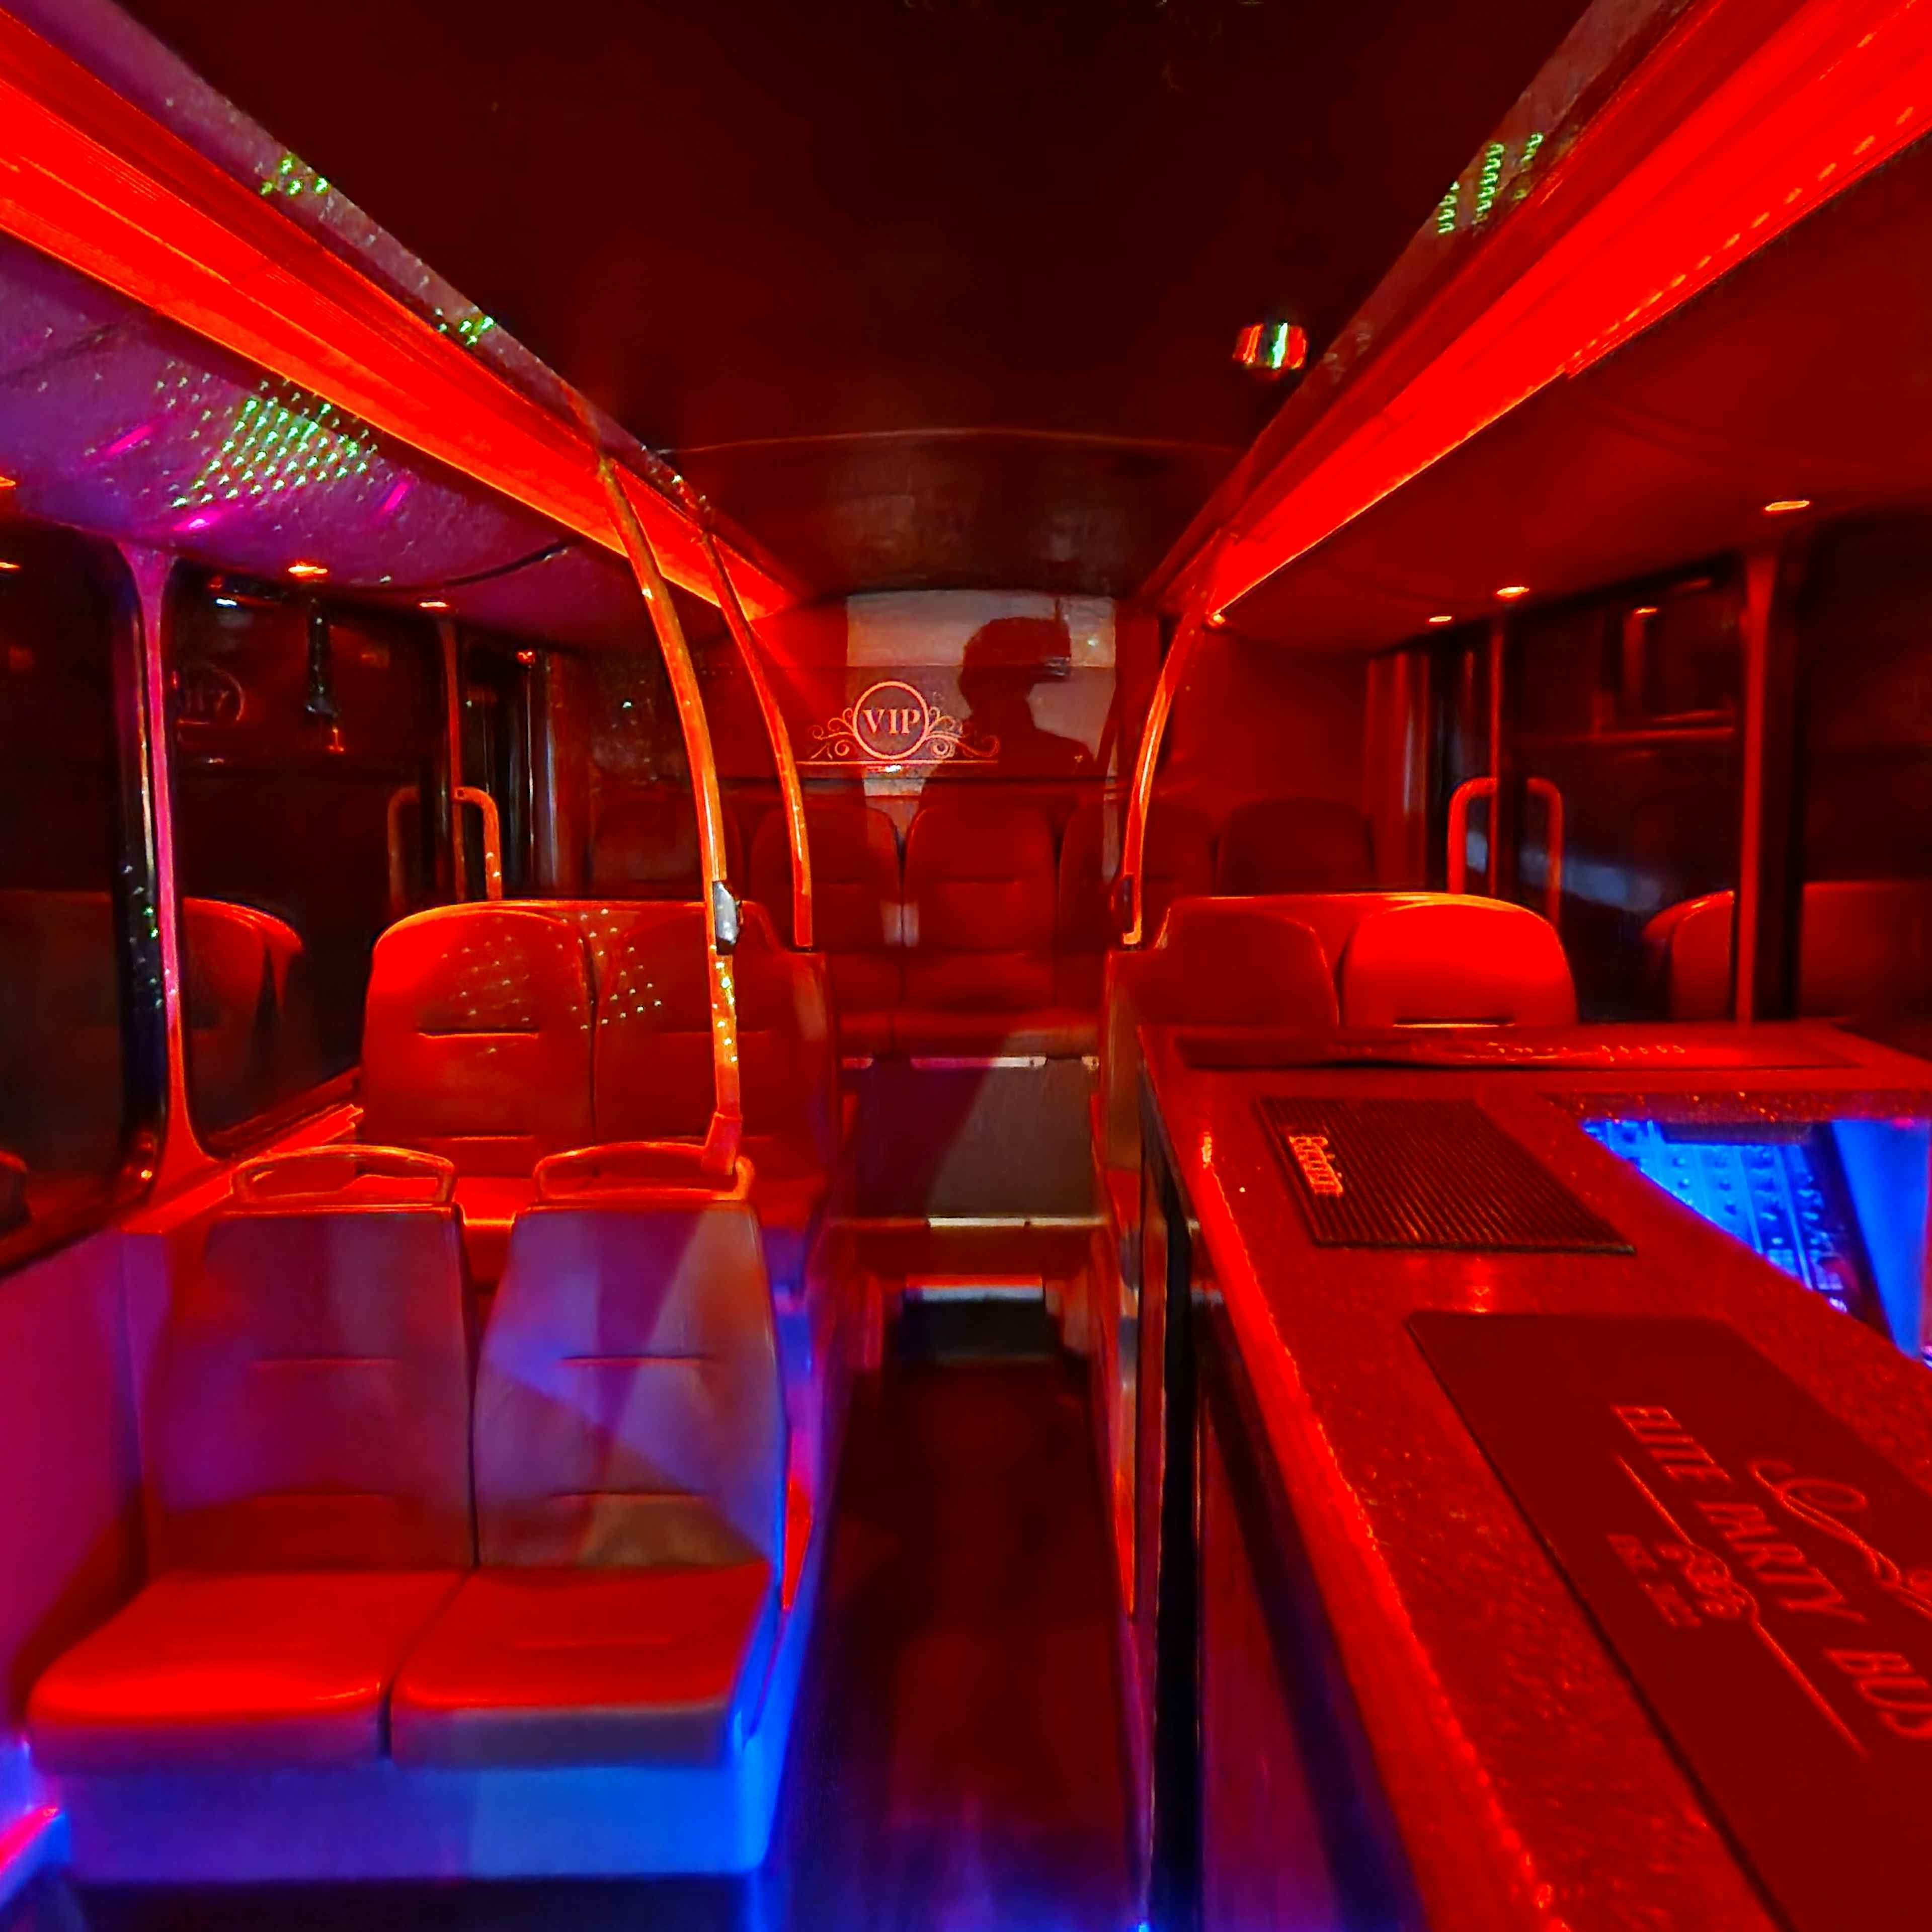 Party bus London  - Party bus London  image 2